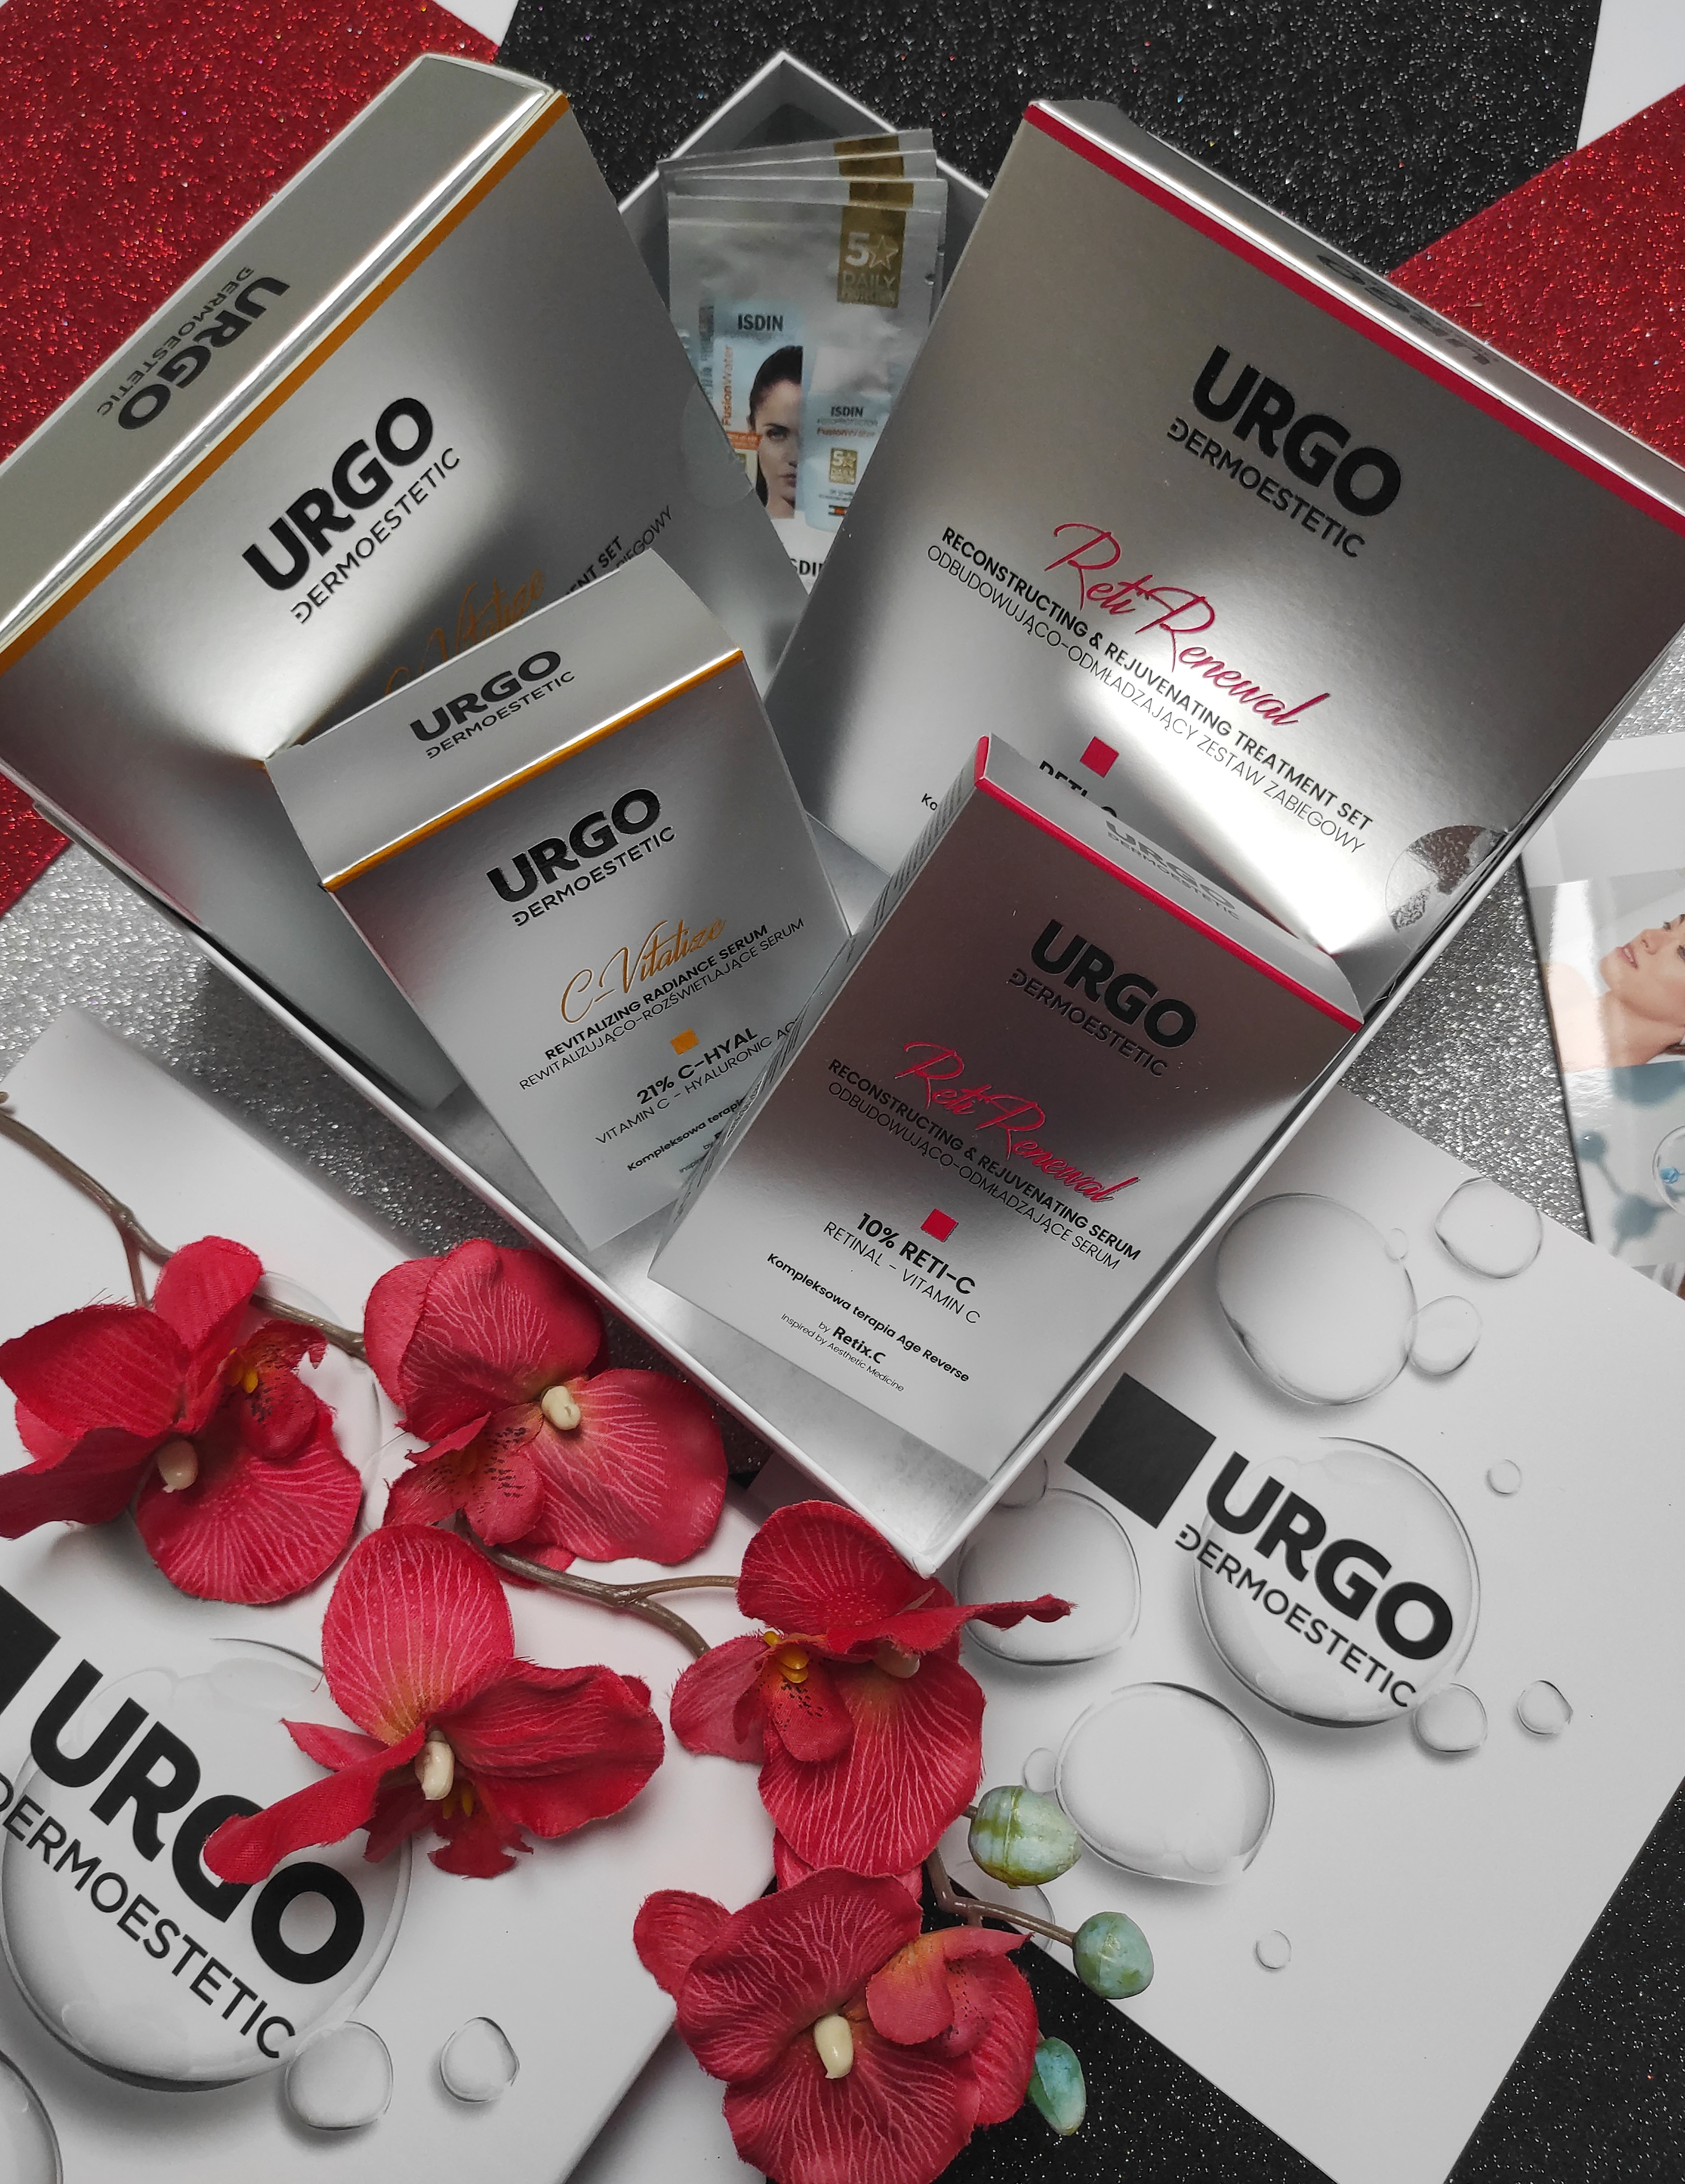 Box Urgo Dermoestetic & Pure Beauty